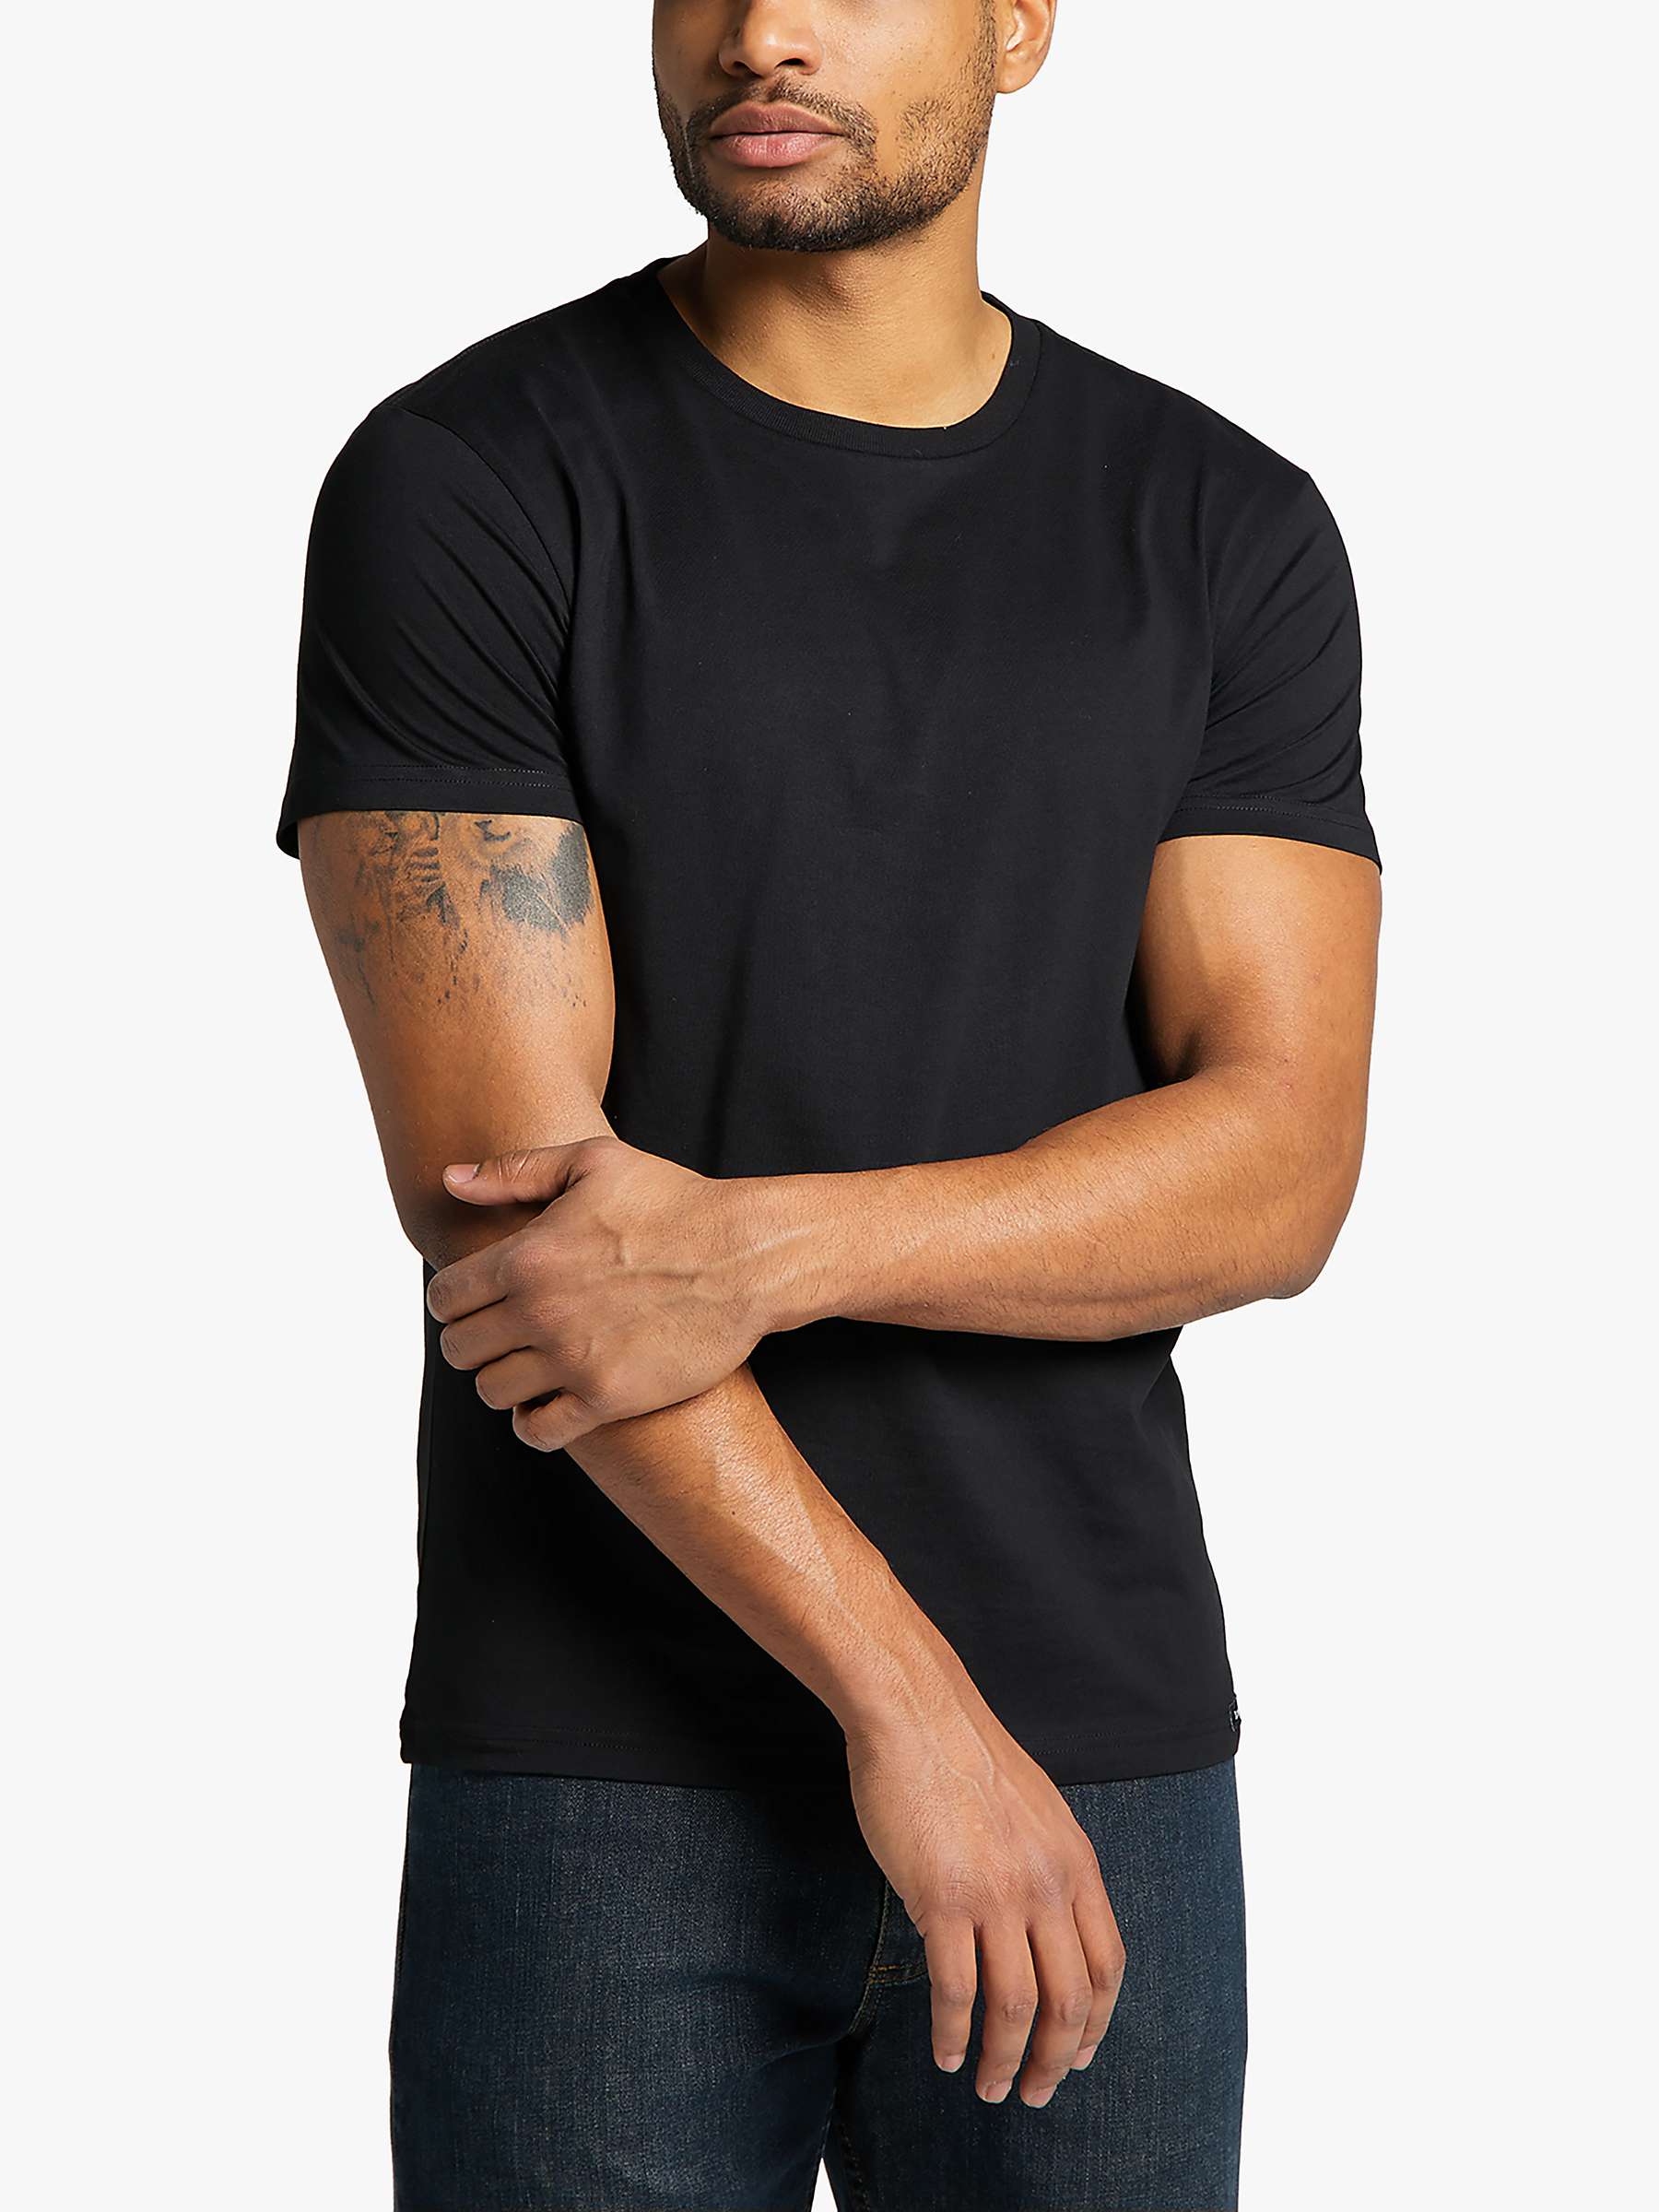 Buy Lee Regular Fit Cotton T-Shirt, Pack of 2, Black/White Online at johnlewis.com